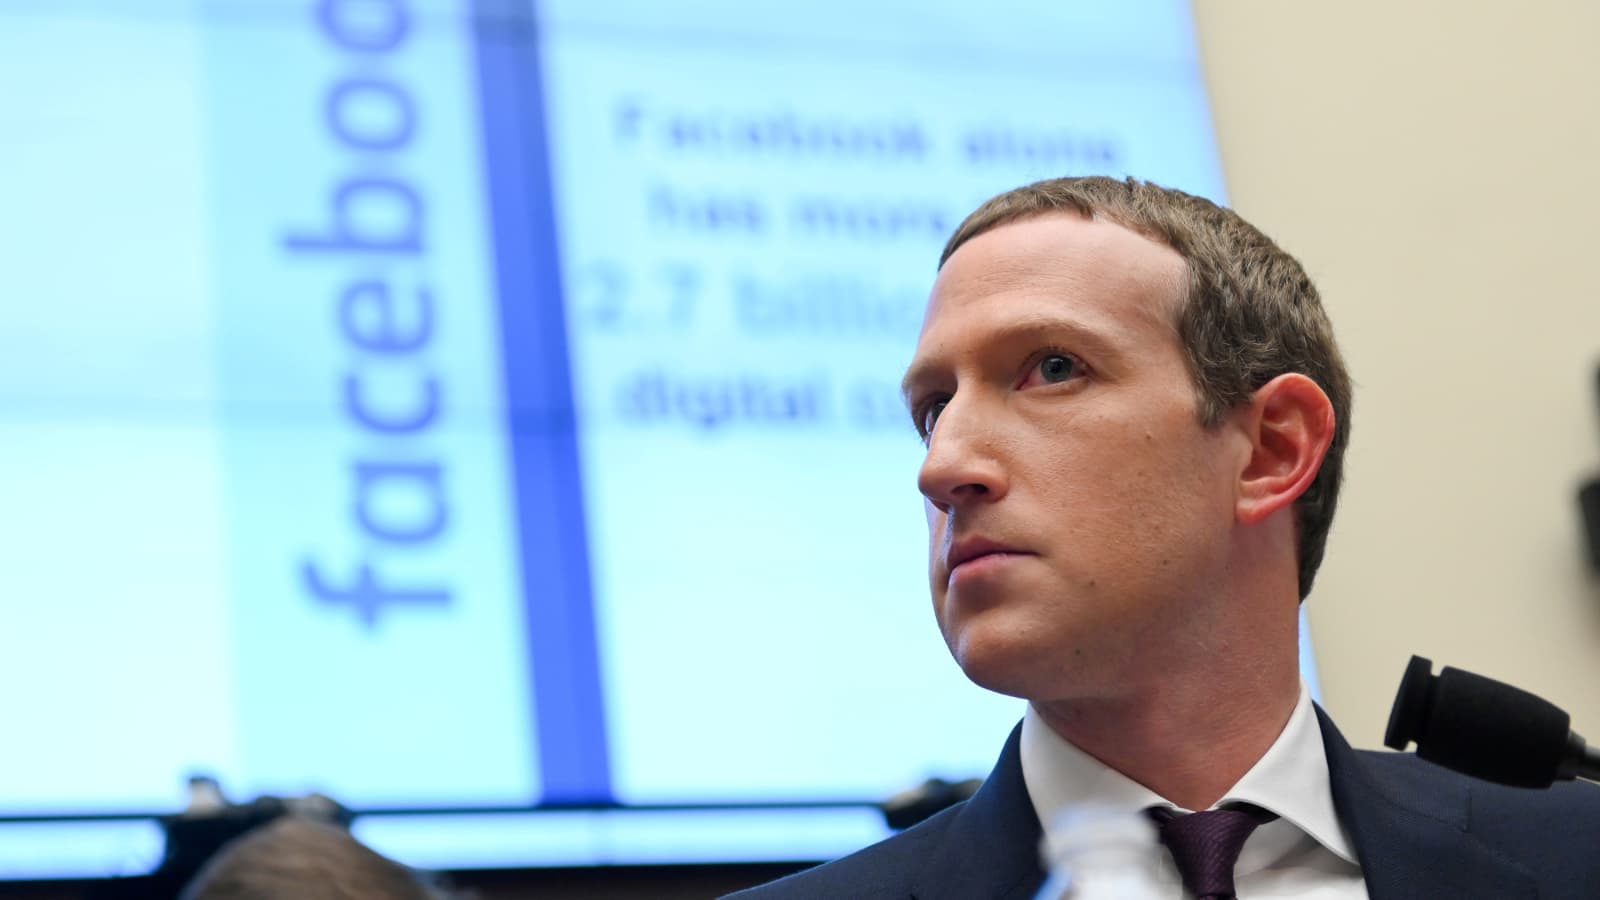 Biden staffer slams Facebook, claiming it's 'shredding' democracy